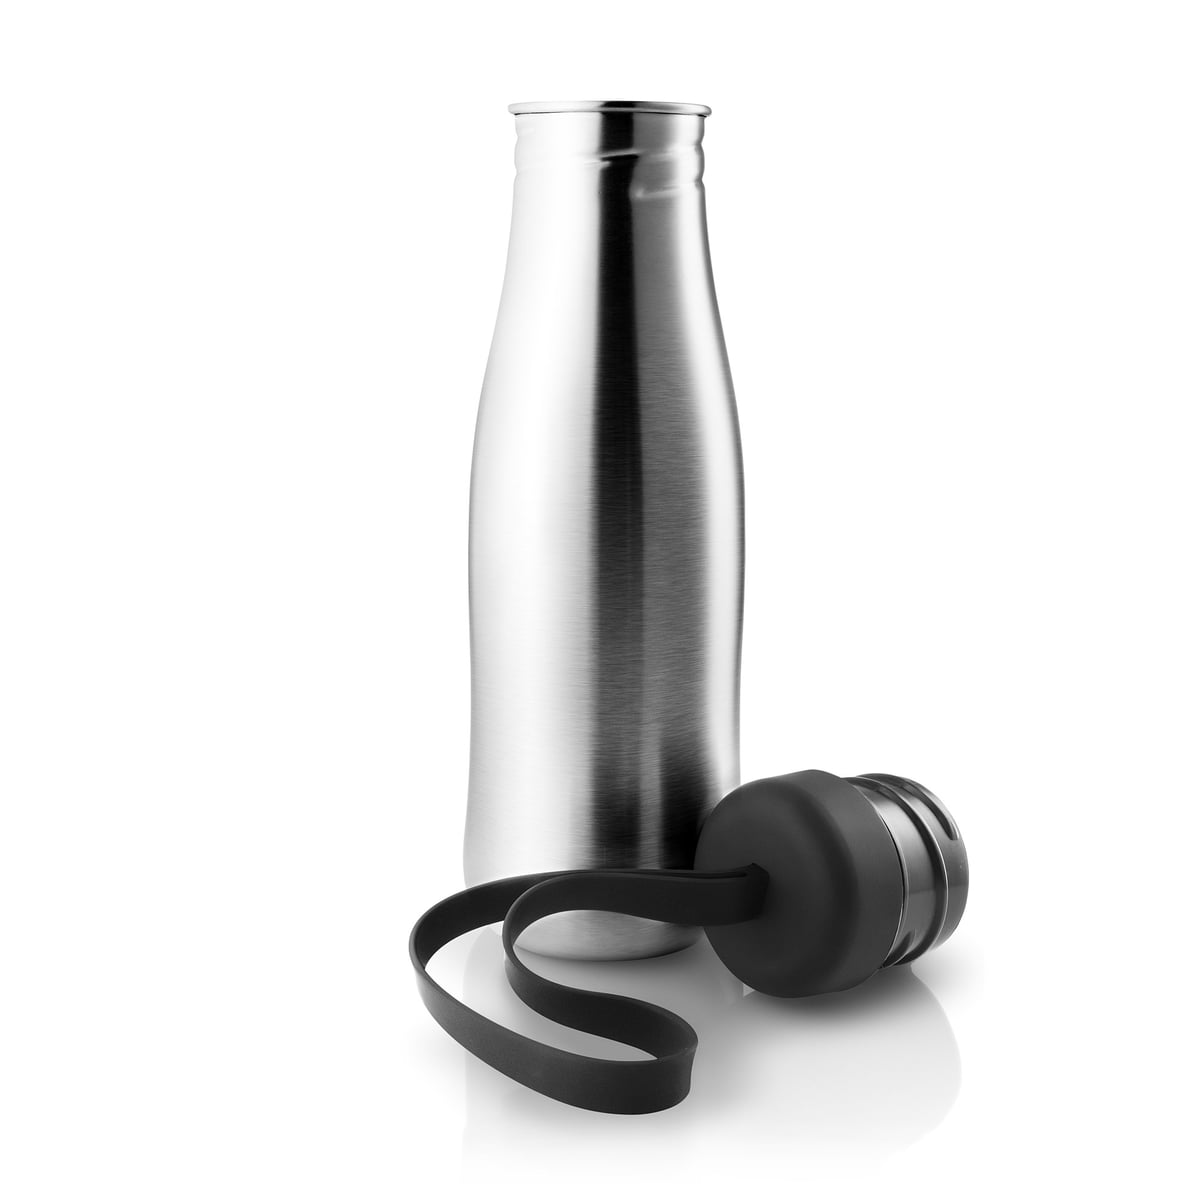 Eva solo - Drinking active bottle 0.7 l, stainless steel / black